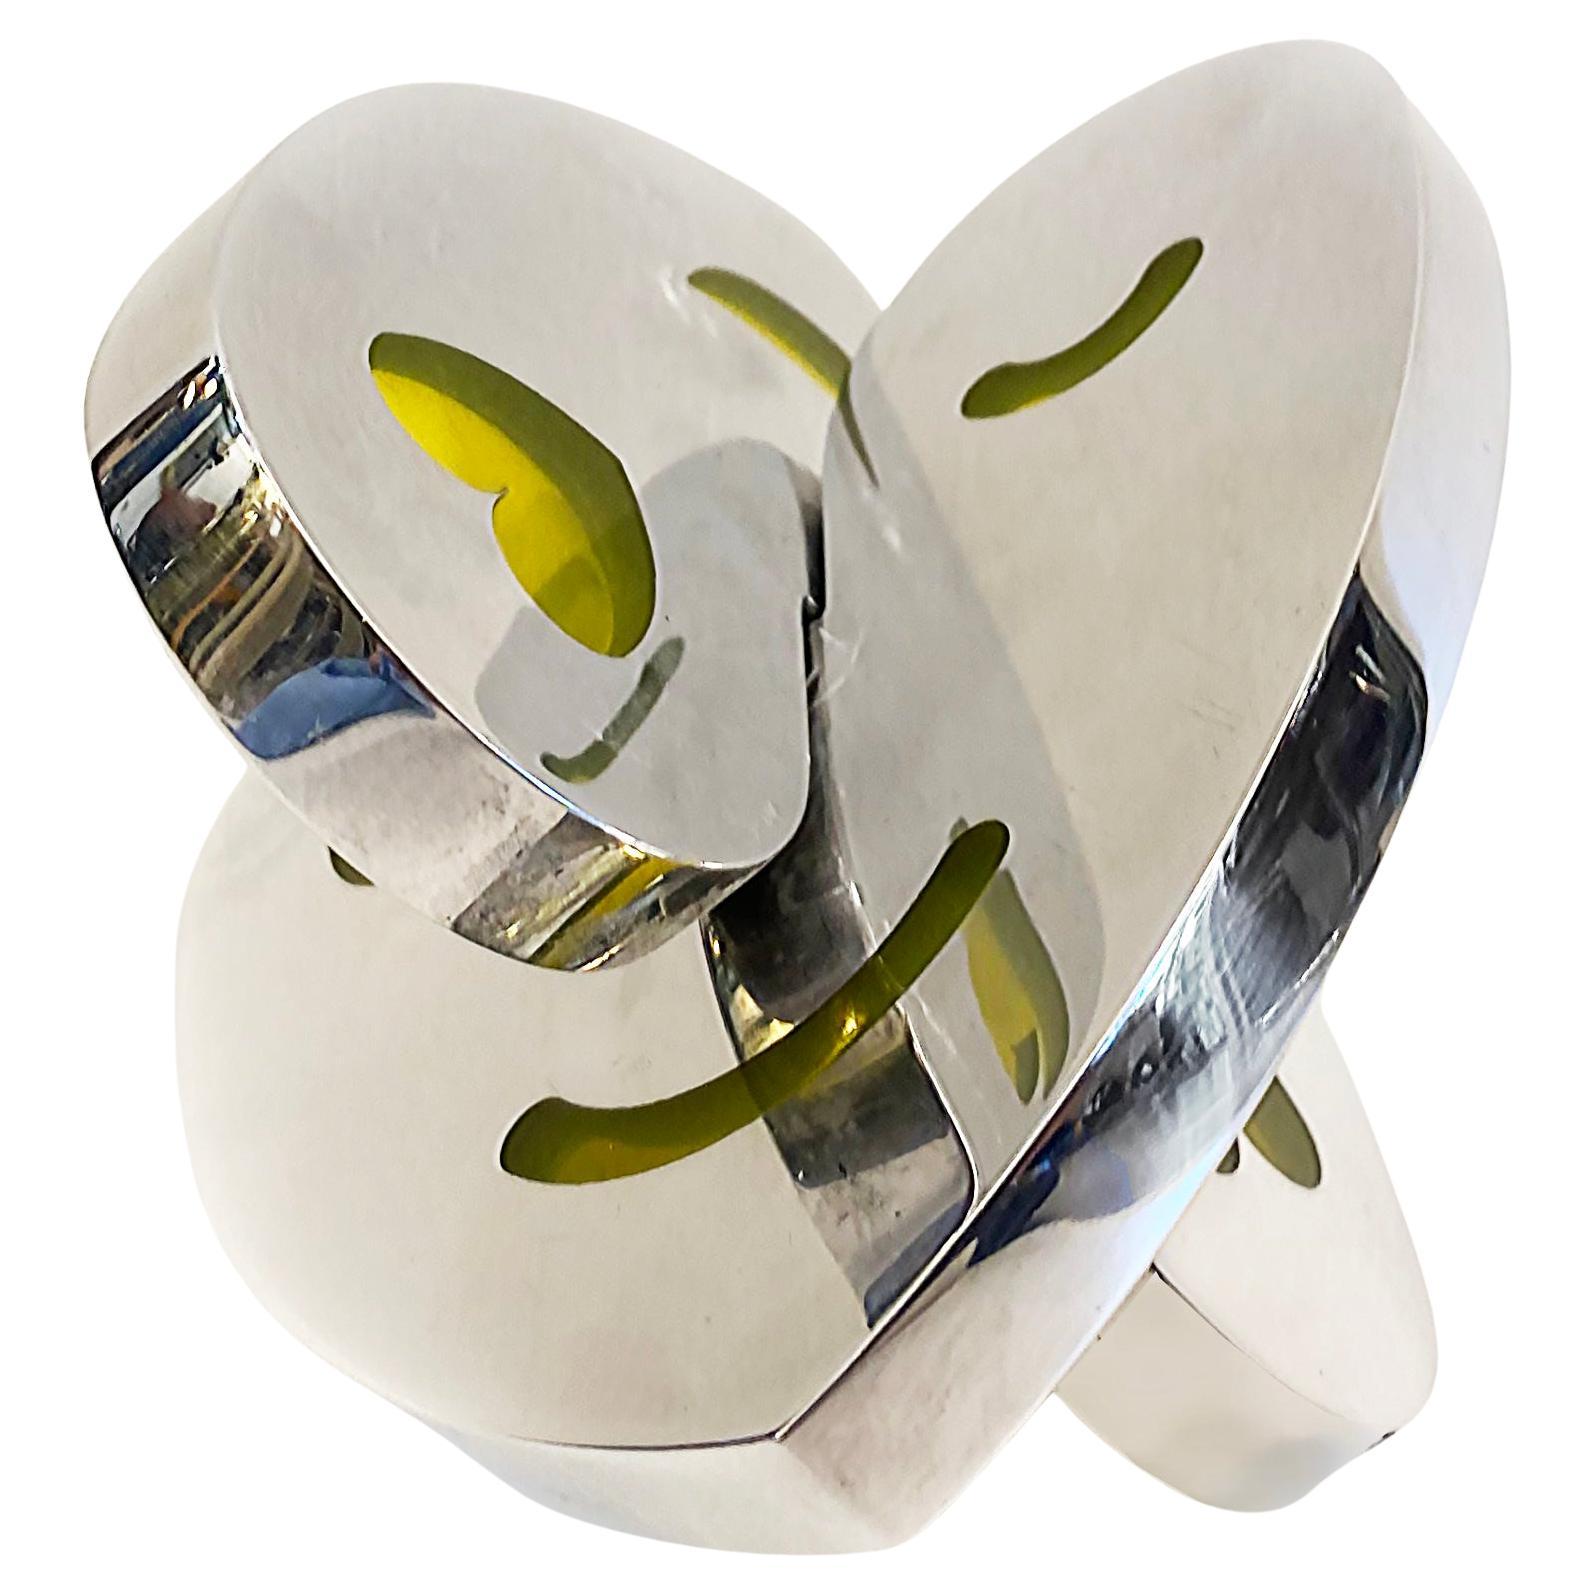 Polished Aluminum, Resin Interlocking Hearts Sculpture by Michael Gitter